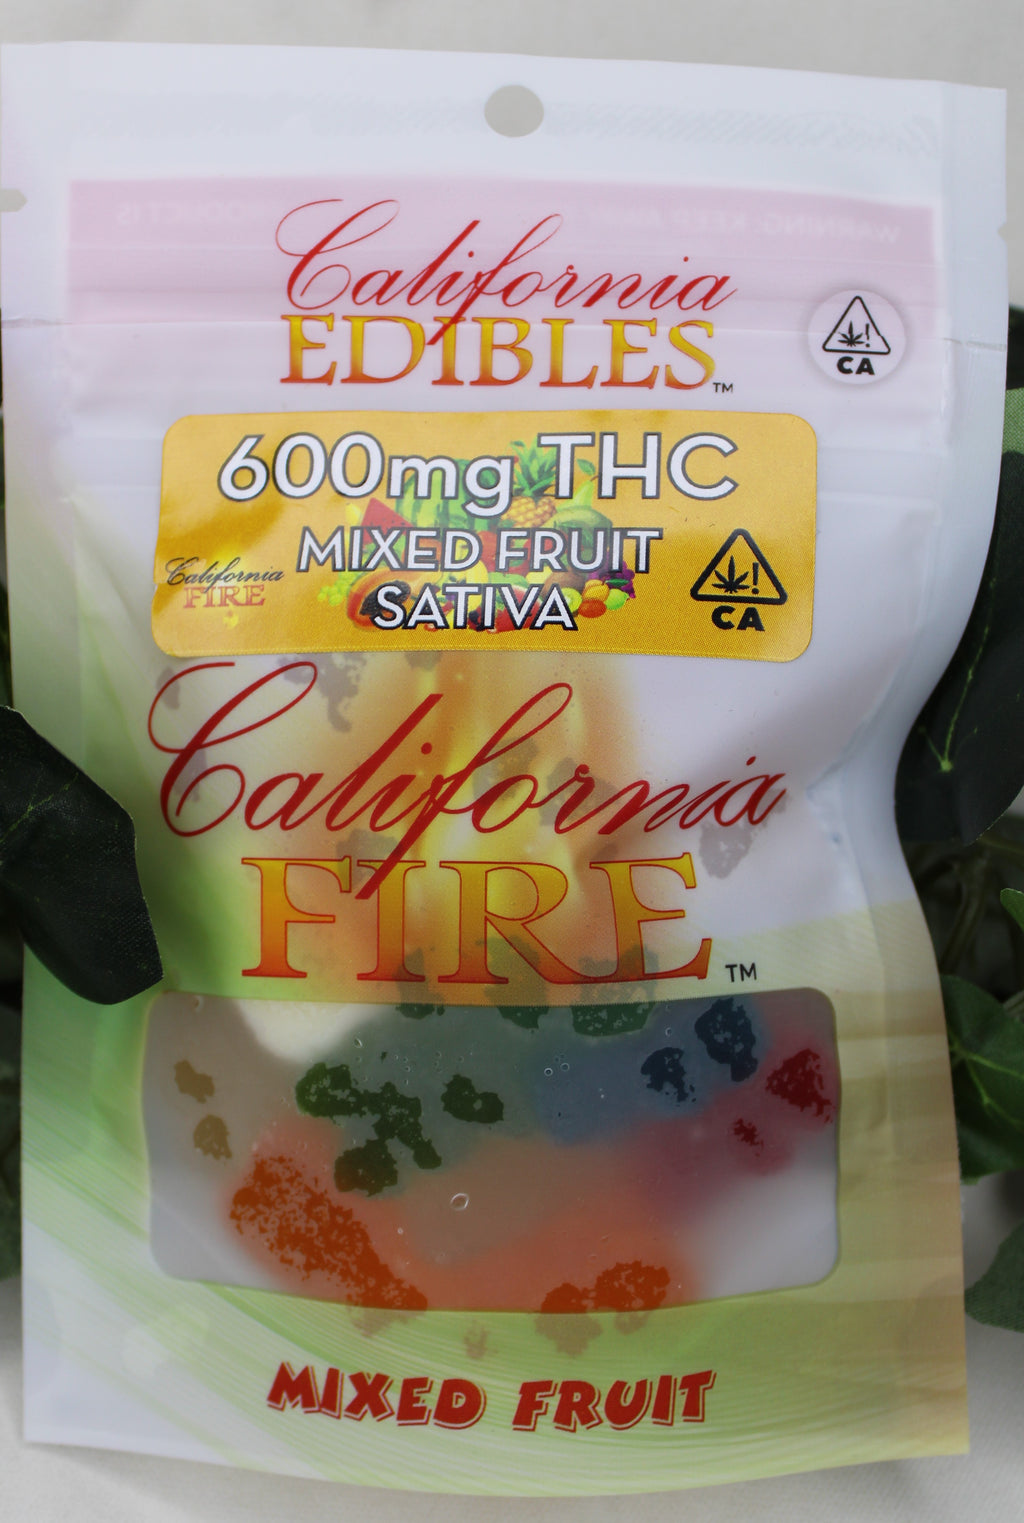 California Fire 600mg "MIXED FRUIT" THC Edible